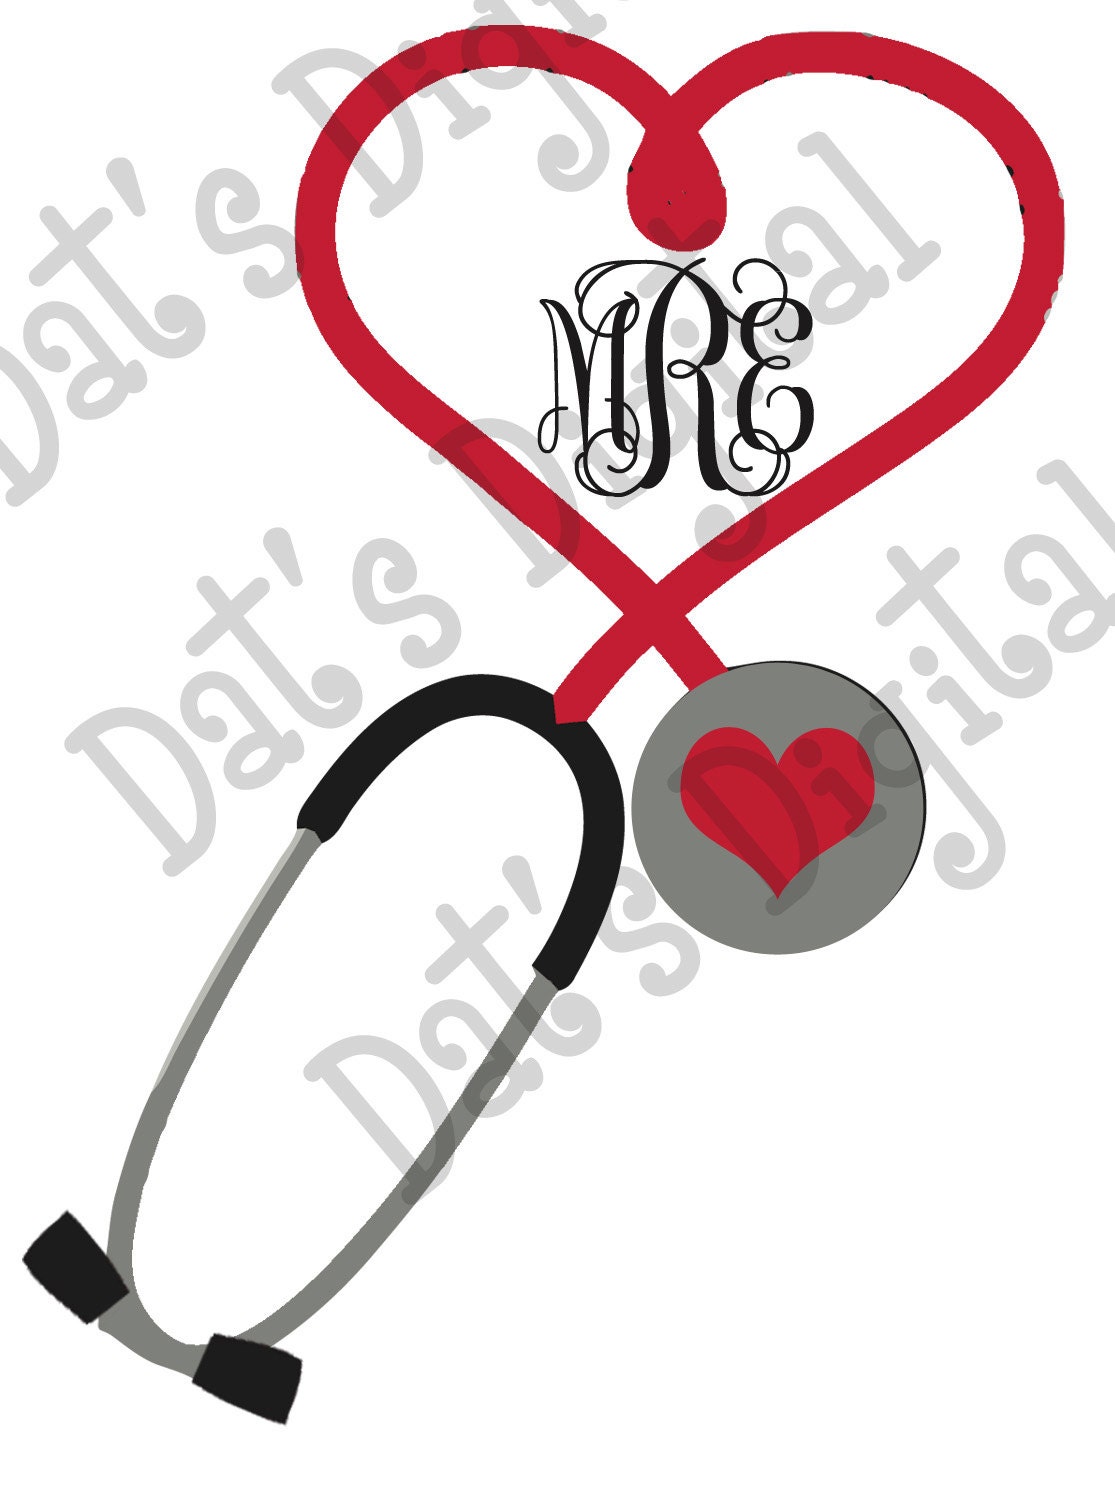 Download Heart Stethoscope Monogram Cutting or Printing Digital File